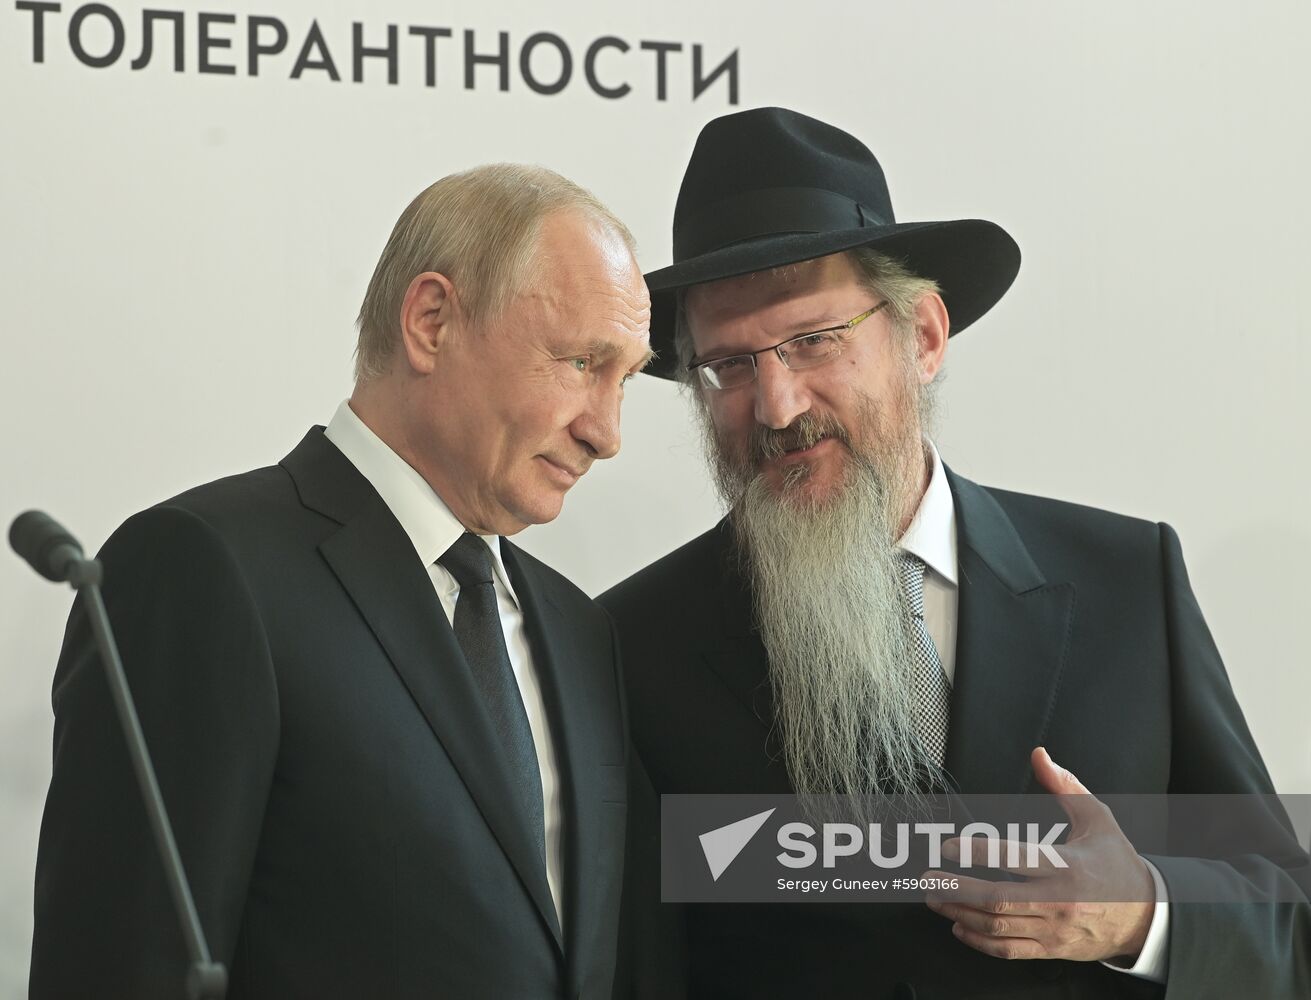 Russia Putin Jewish Museum